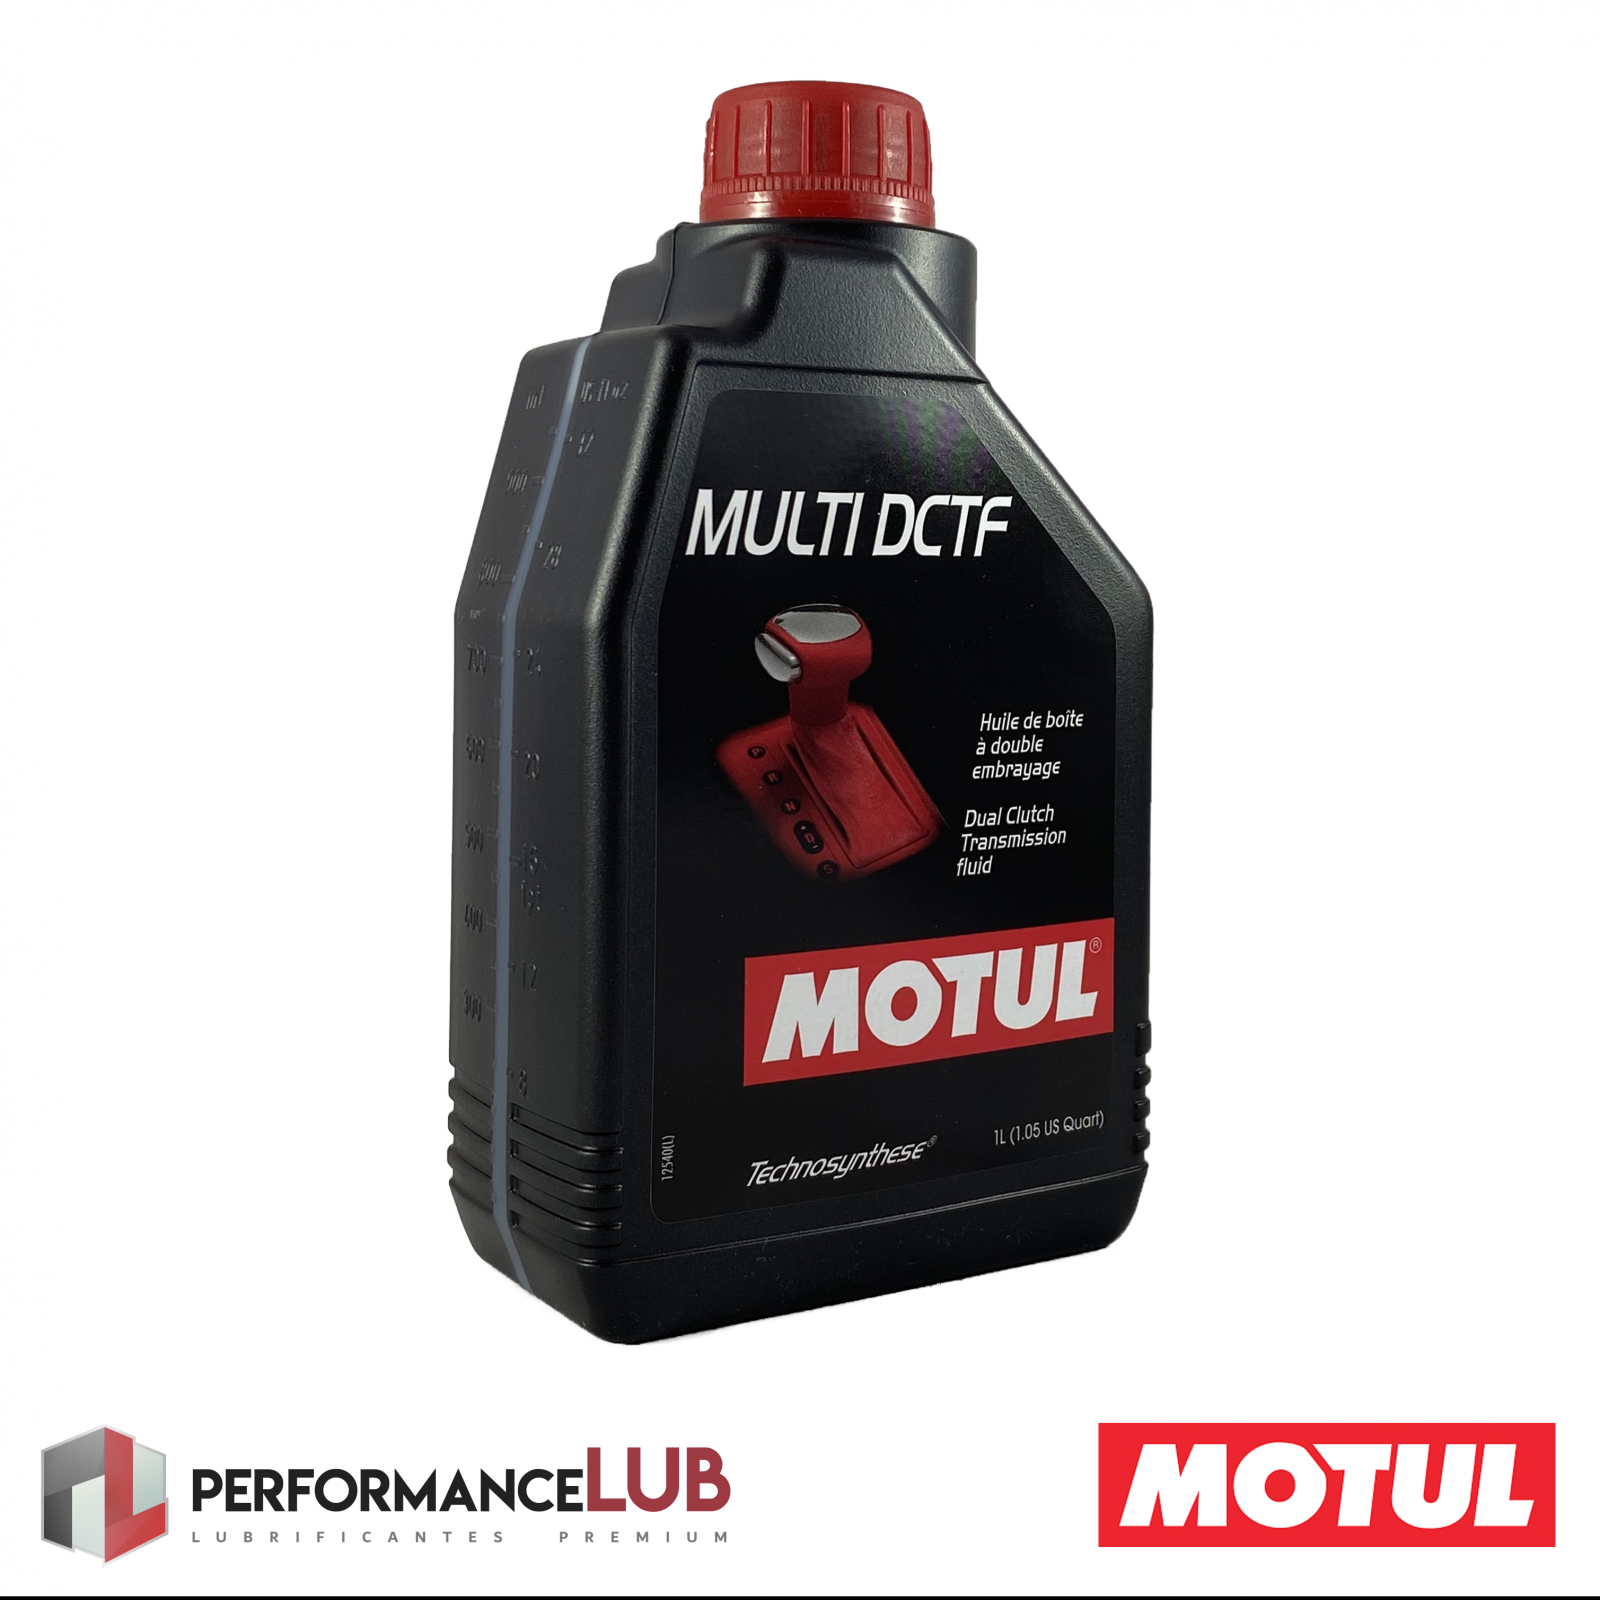 Motul Multi DCTF (API GL-4) - 1 litro - PerformanceLUB Lubrificantes Premium